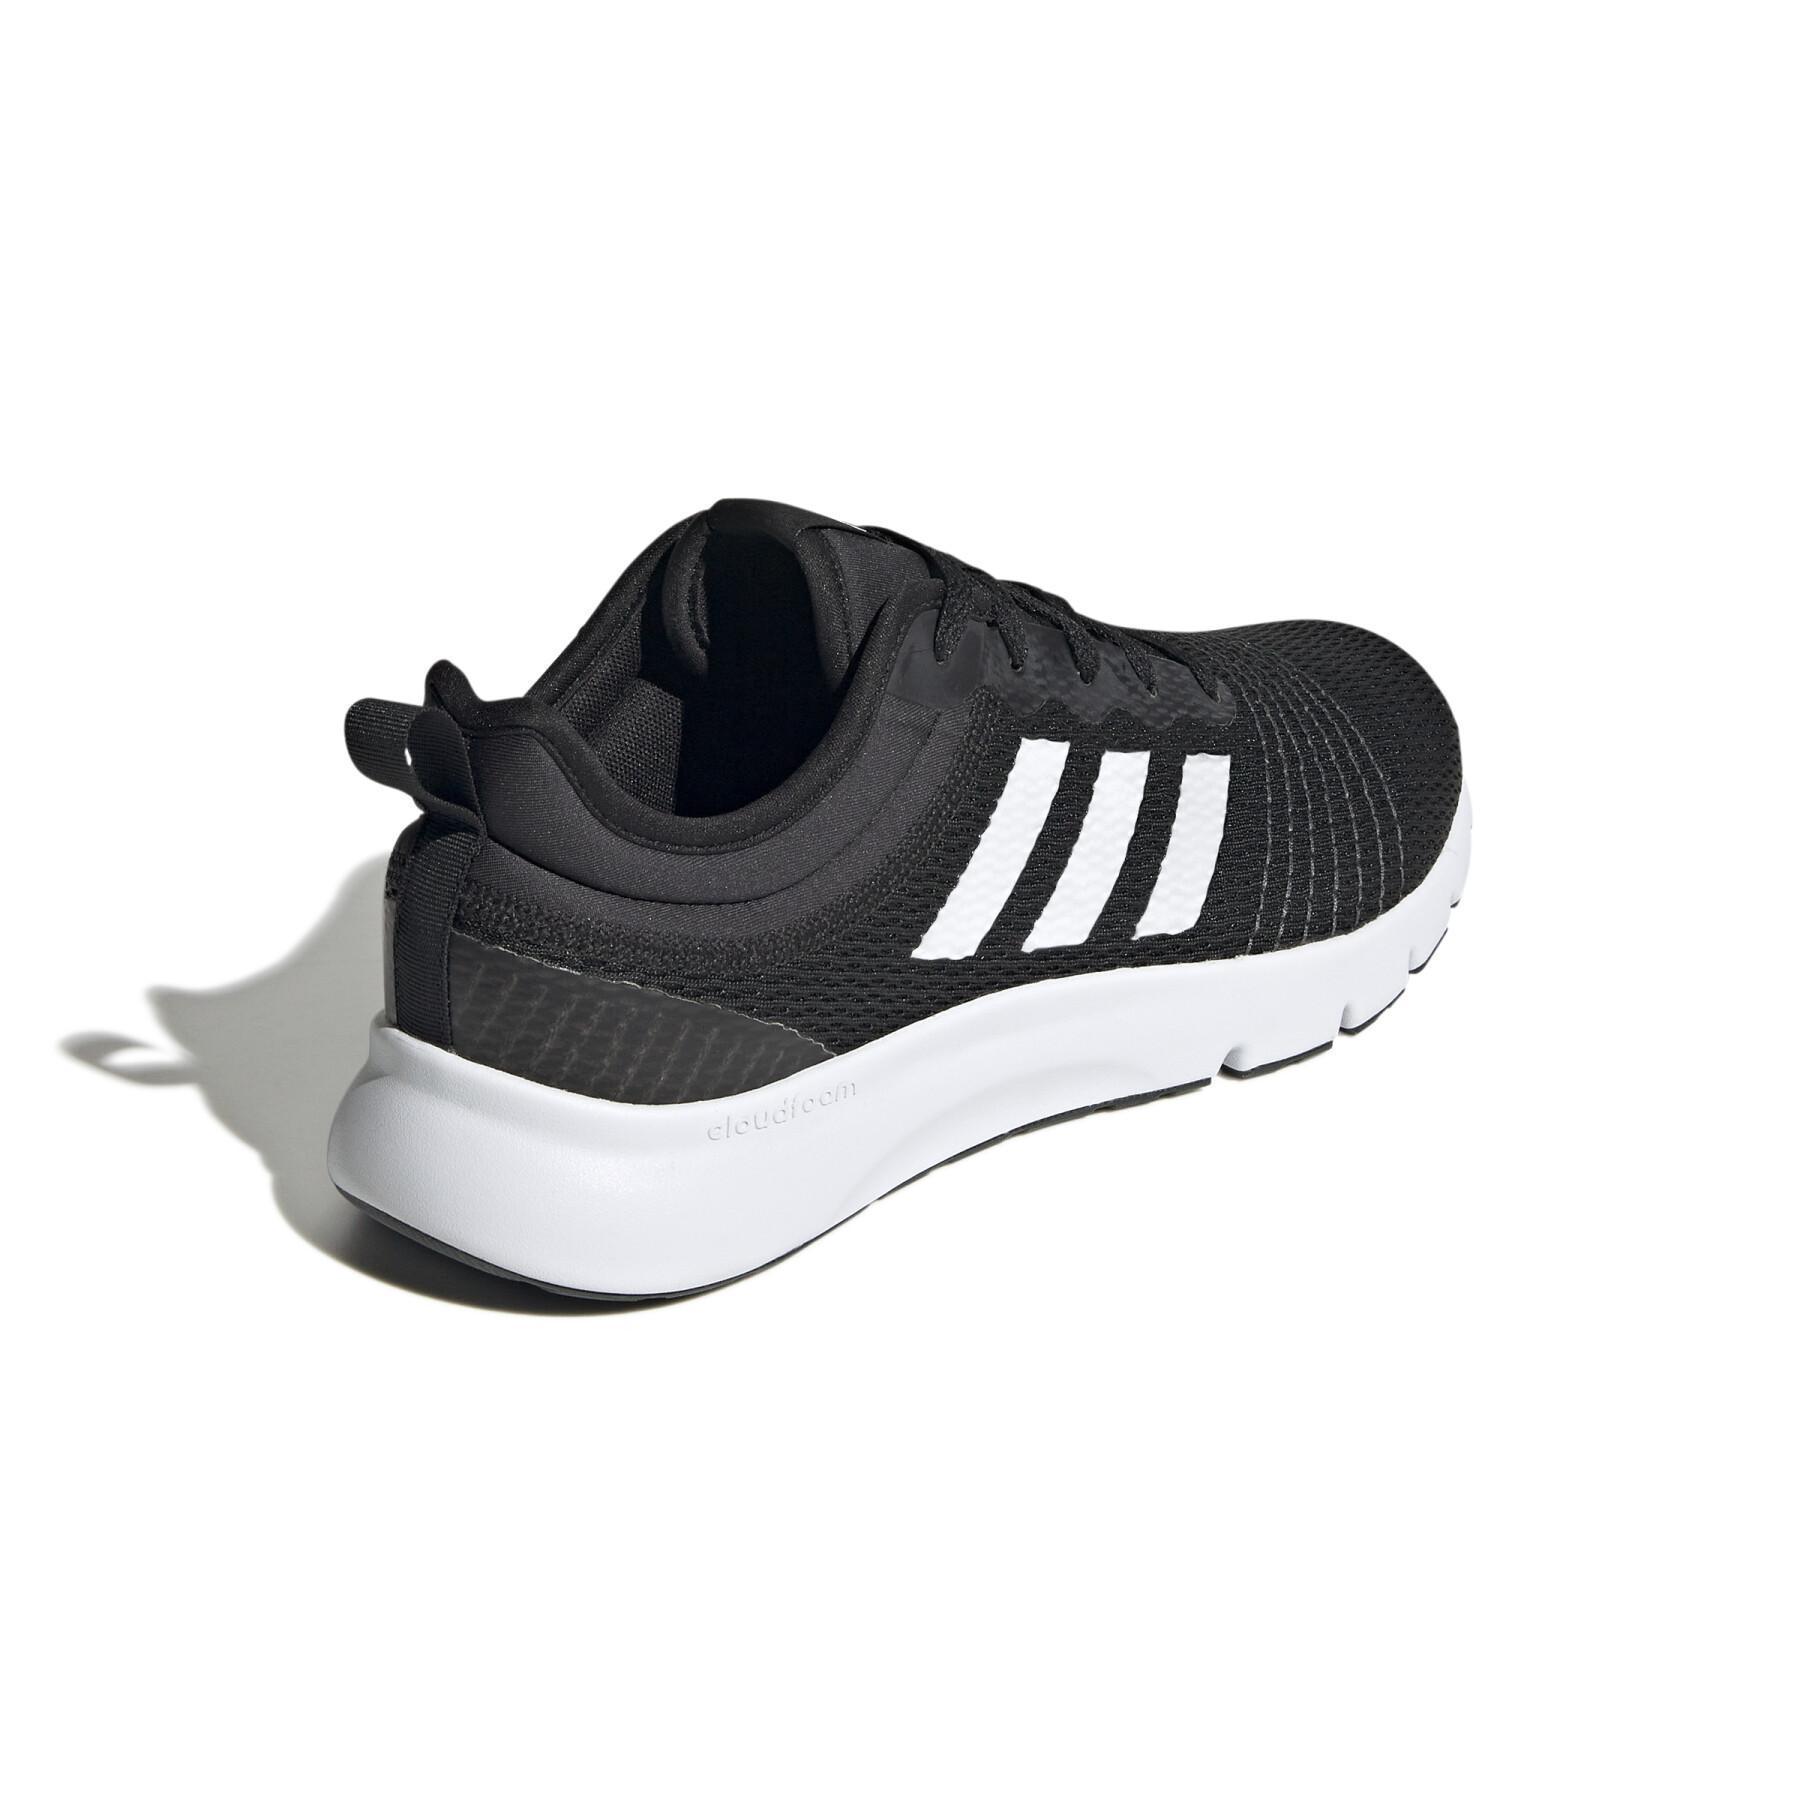 Running shoes adidas Fluid up